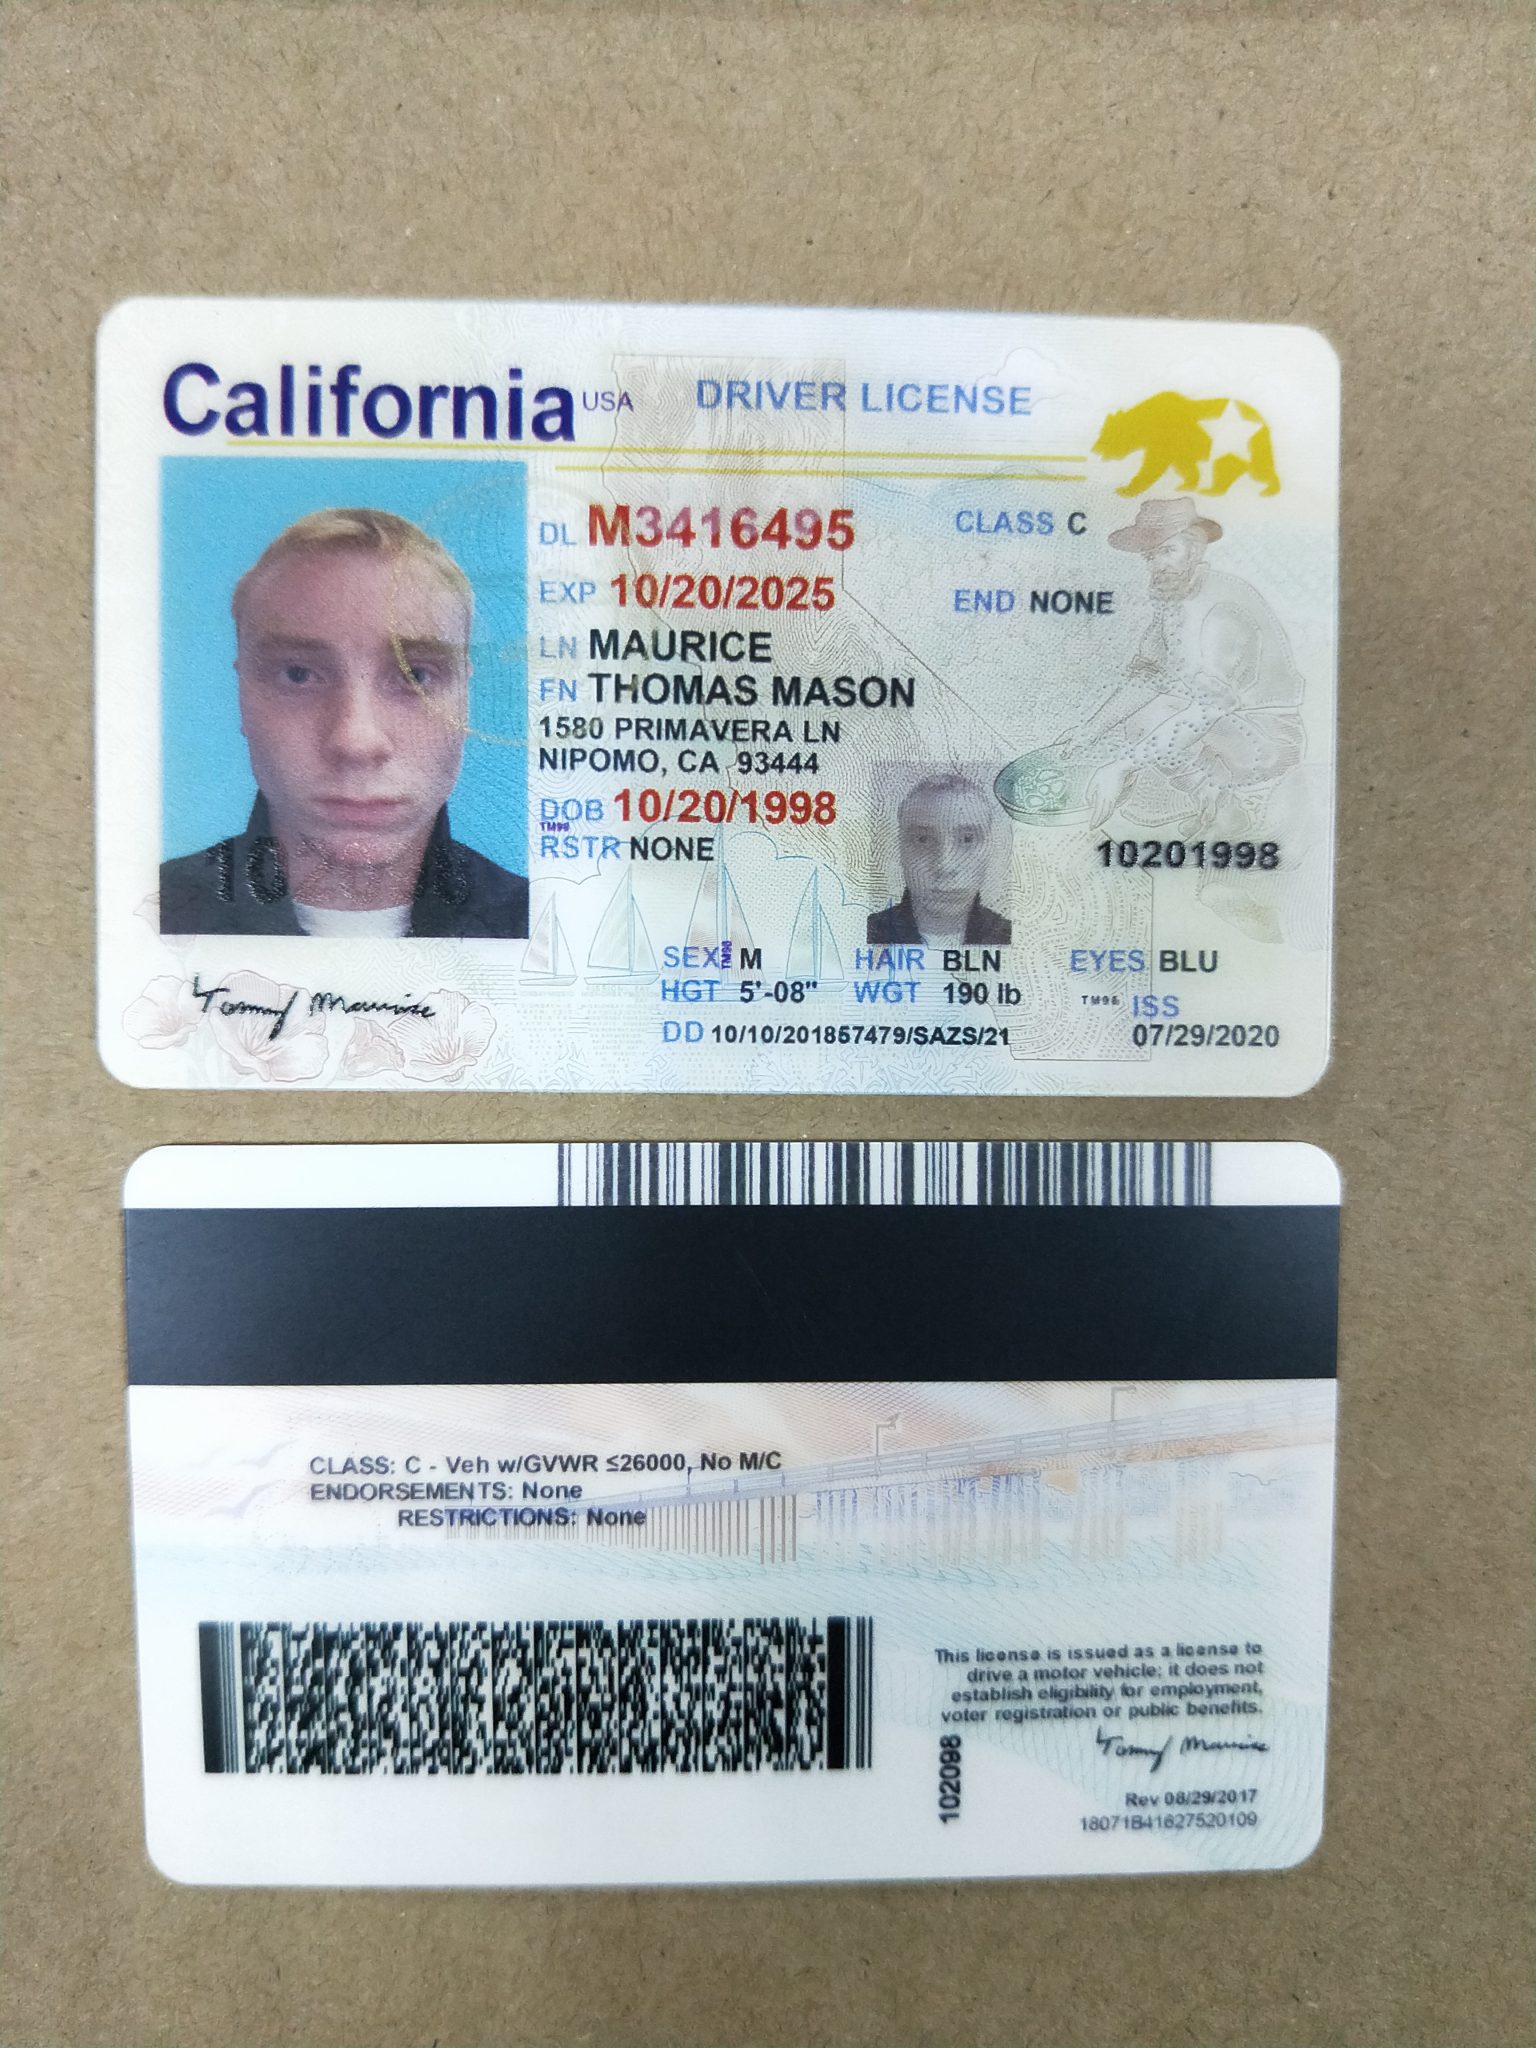 id card fake